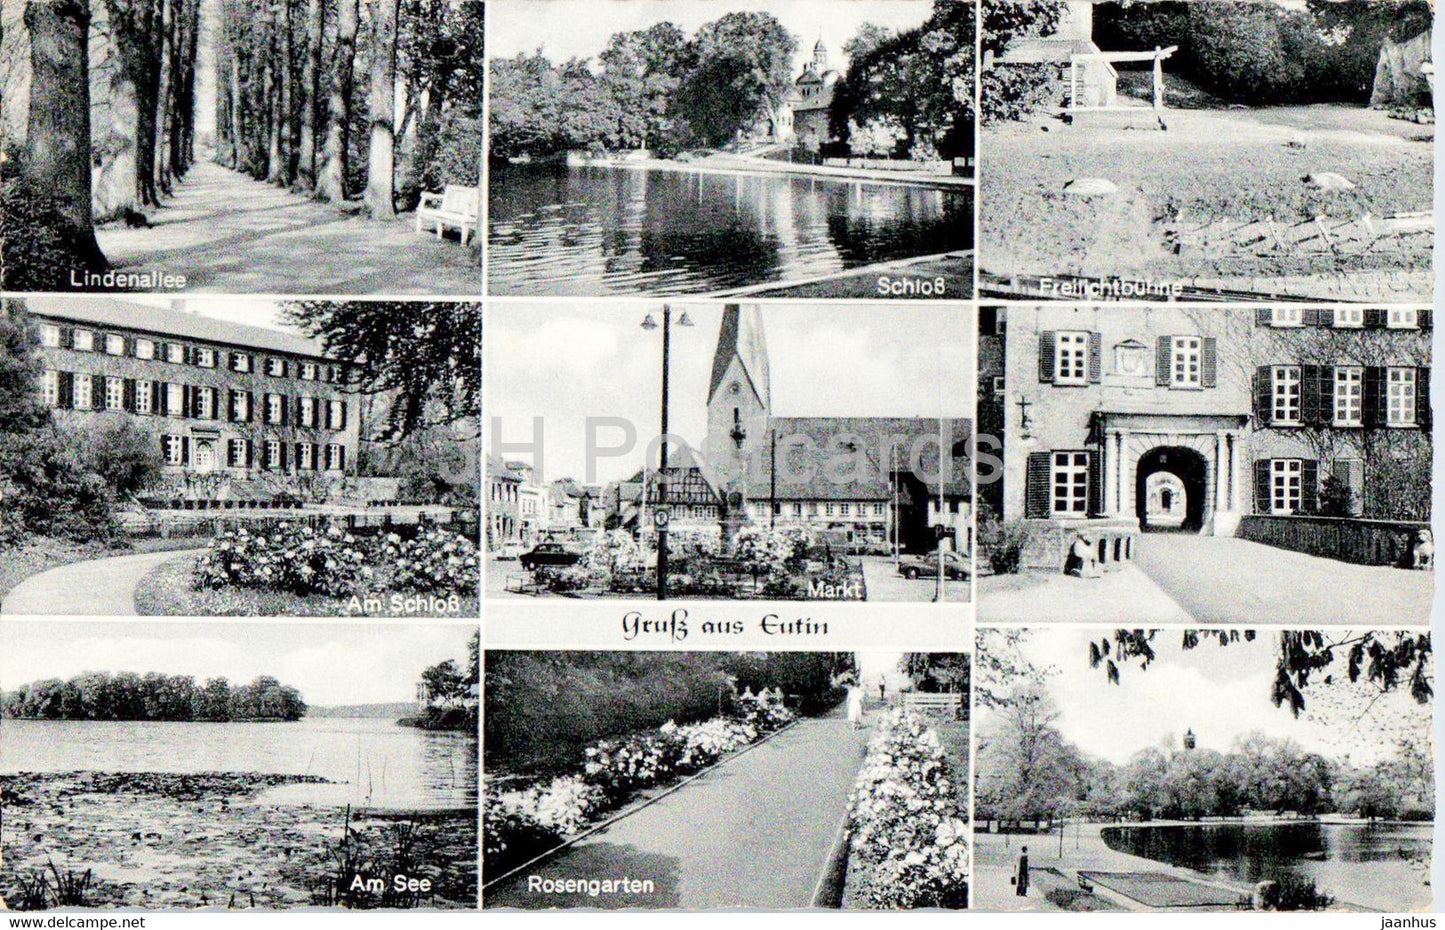 Gruss aus Eutin - Schloss - Markt - Rosengarten - old postcard - 1957 - Germany - used - JH Postcards